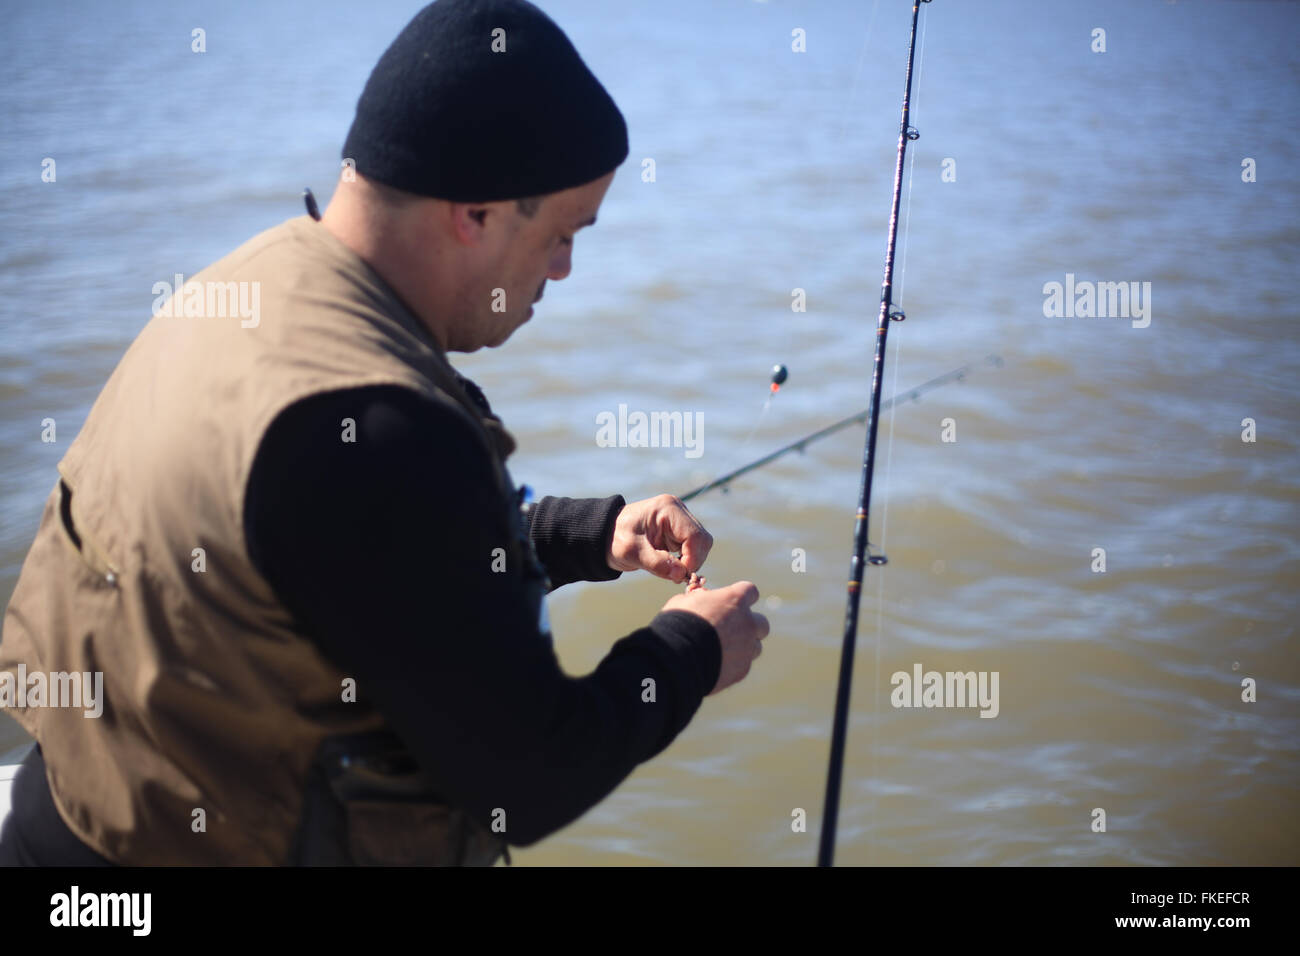 Fisherman baiting hook Stock Photo - Alamy